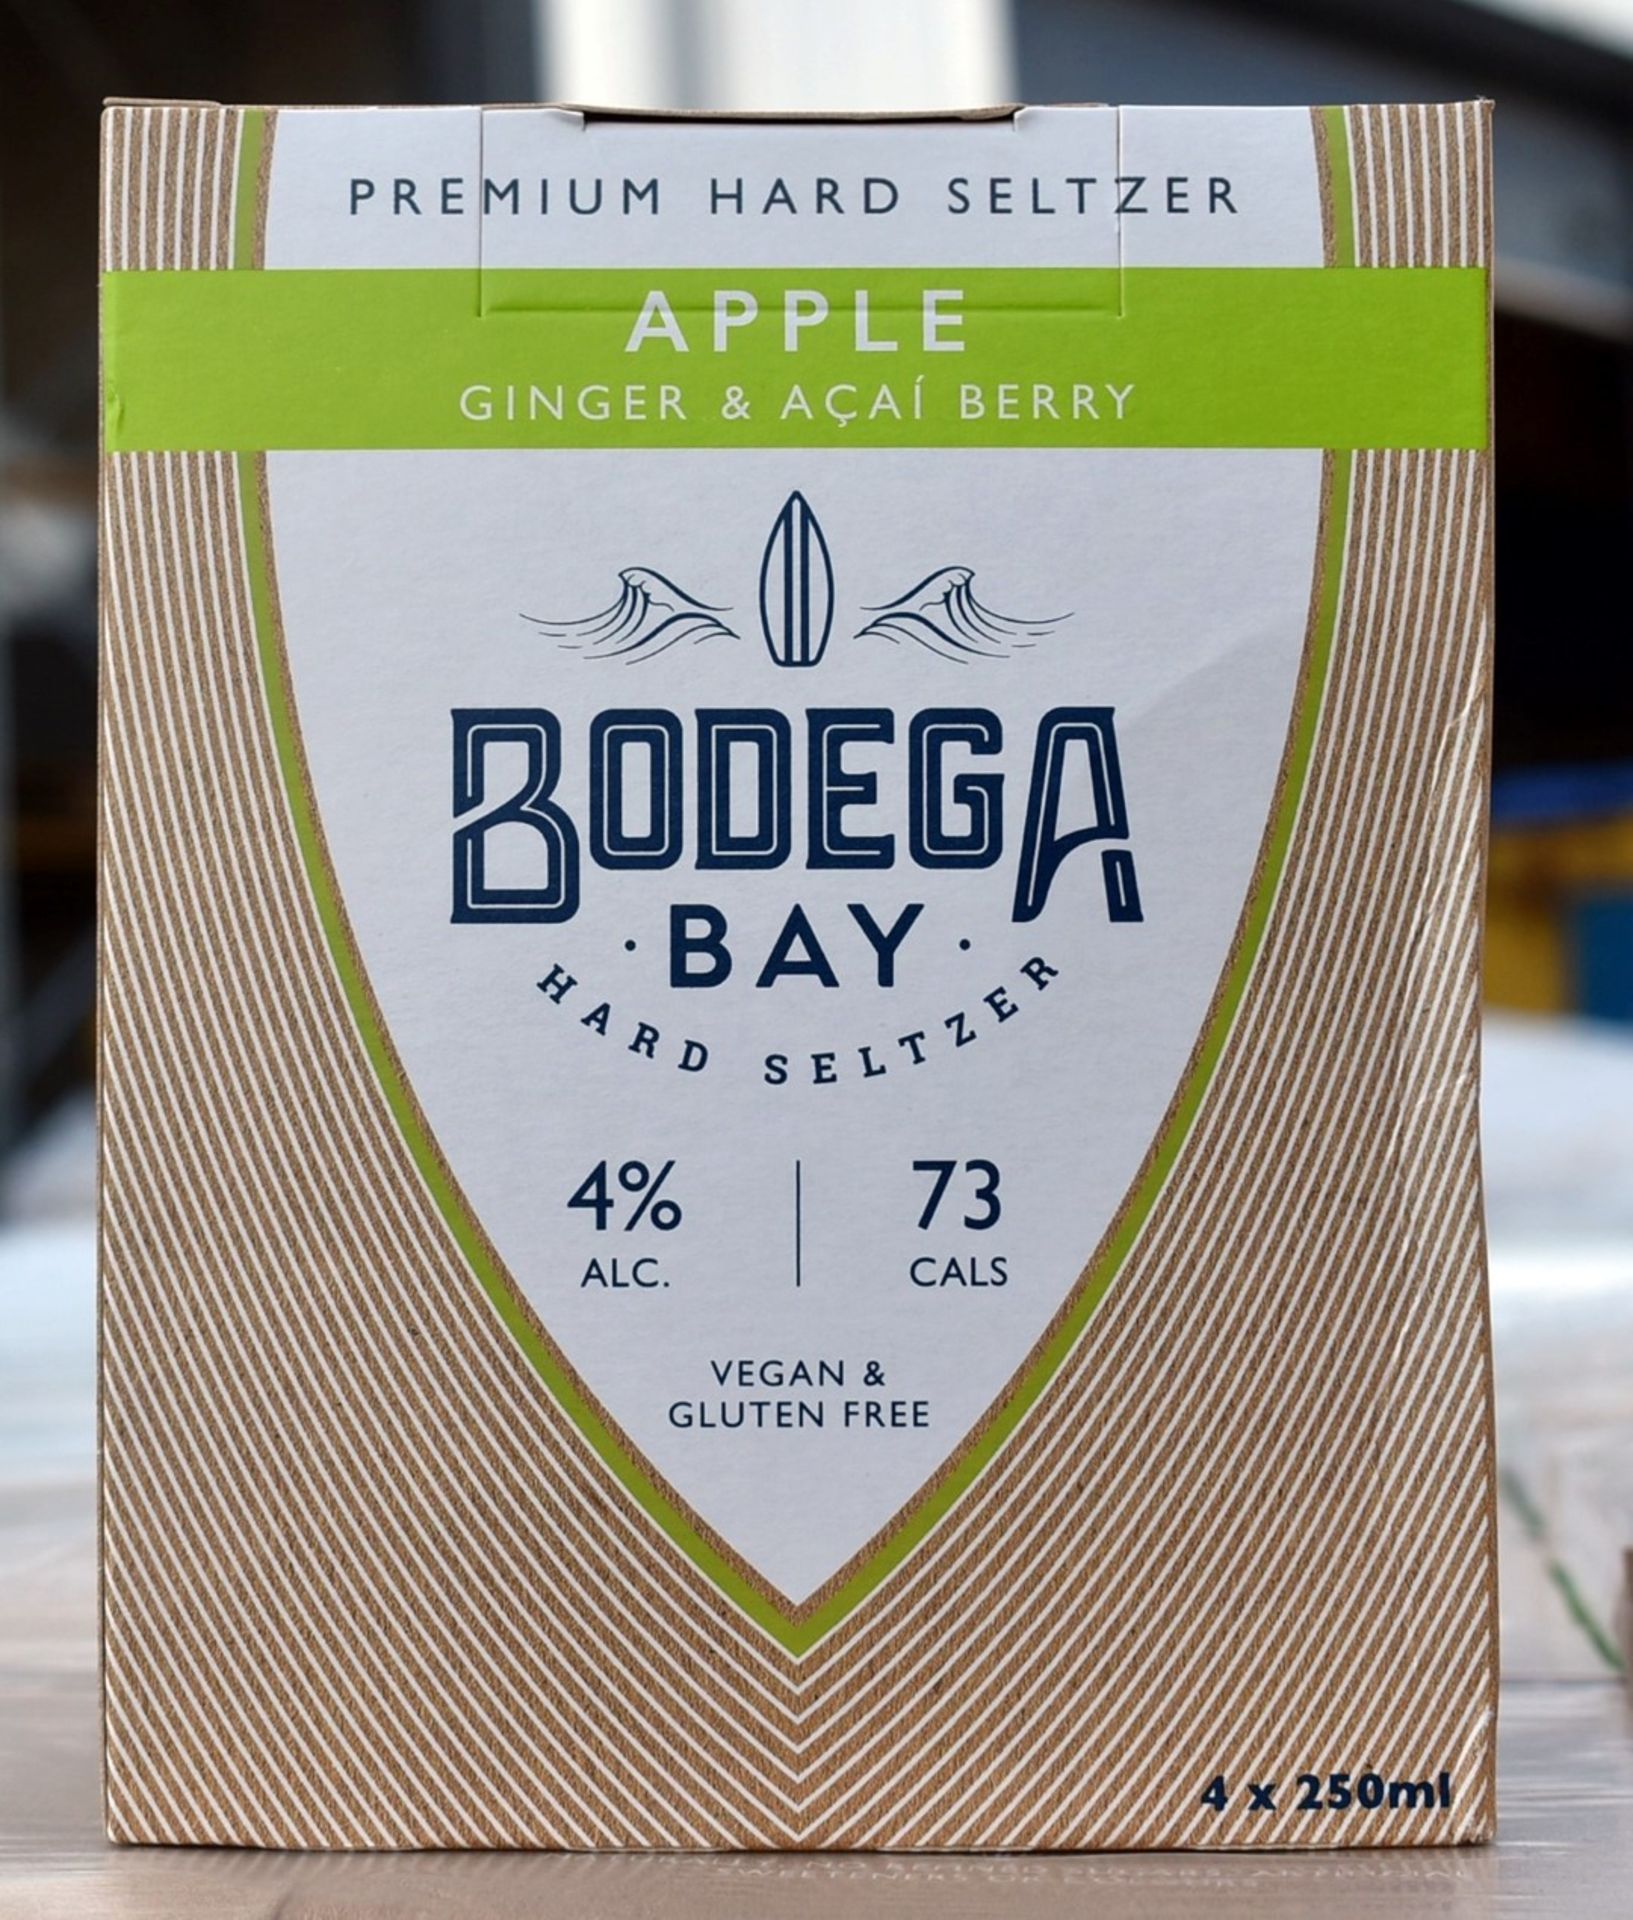 24 x Bodega Bay Hard Seltzer 250ml Alcoholic Sparkling Water Drinks - Apple Ginger & Acai Berry - 4% - Image 2 of 9